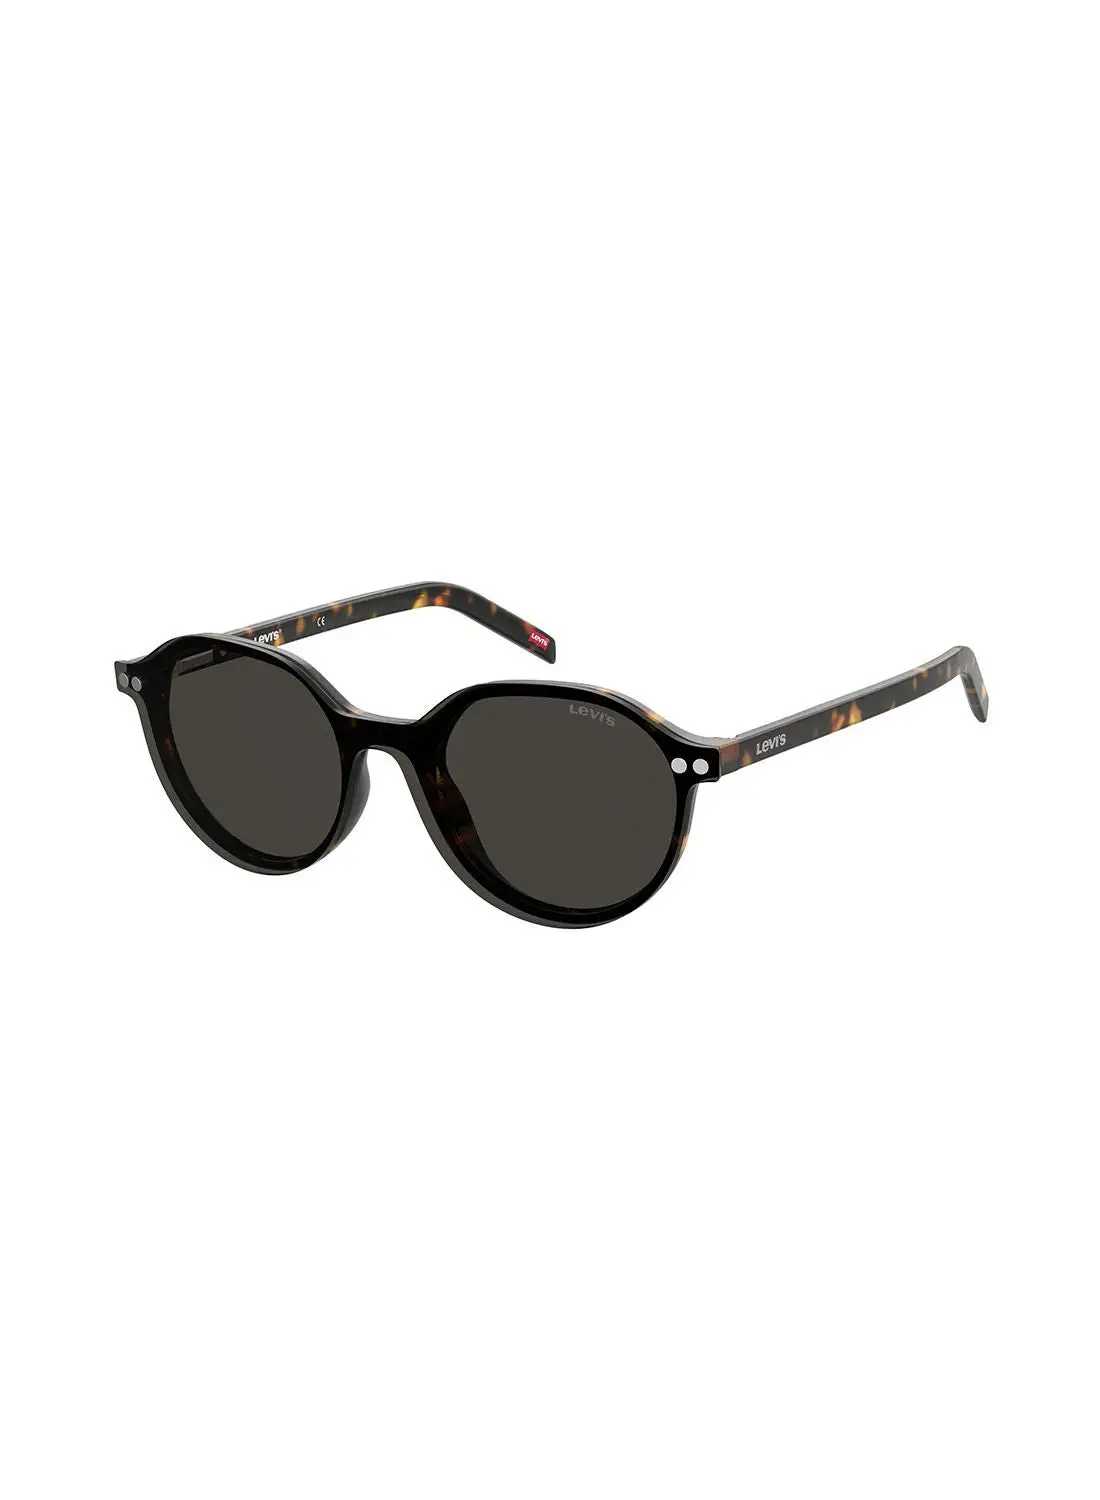 Levi's Unisex UV Protection Oval Sunglasses - Lv 1017/Cs Hvn 50 - Lens Size: 50 Mm